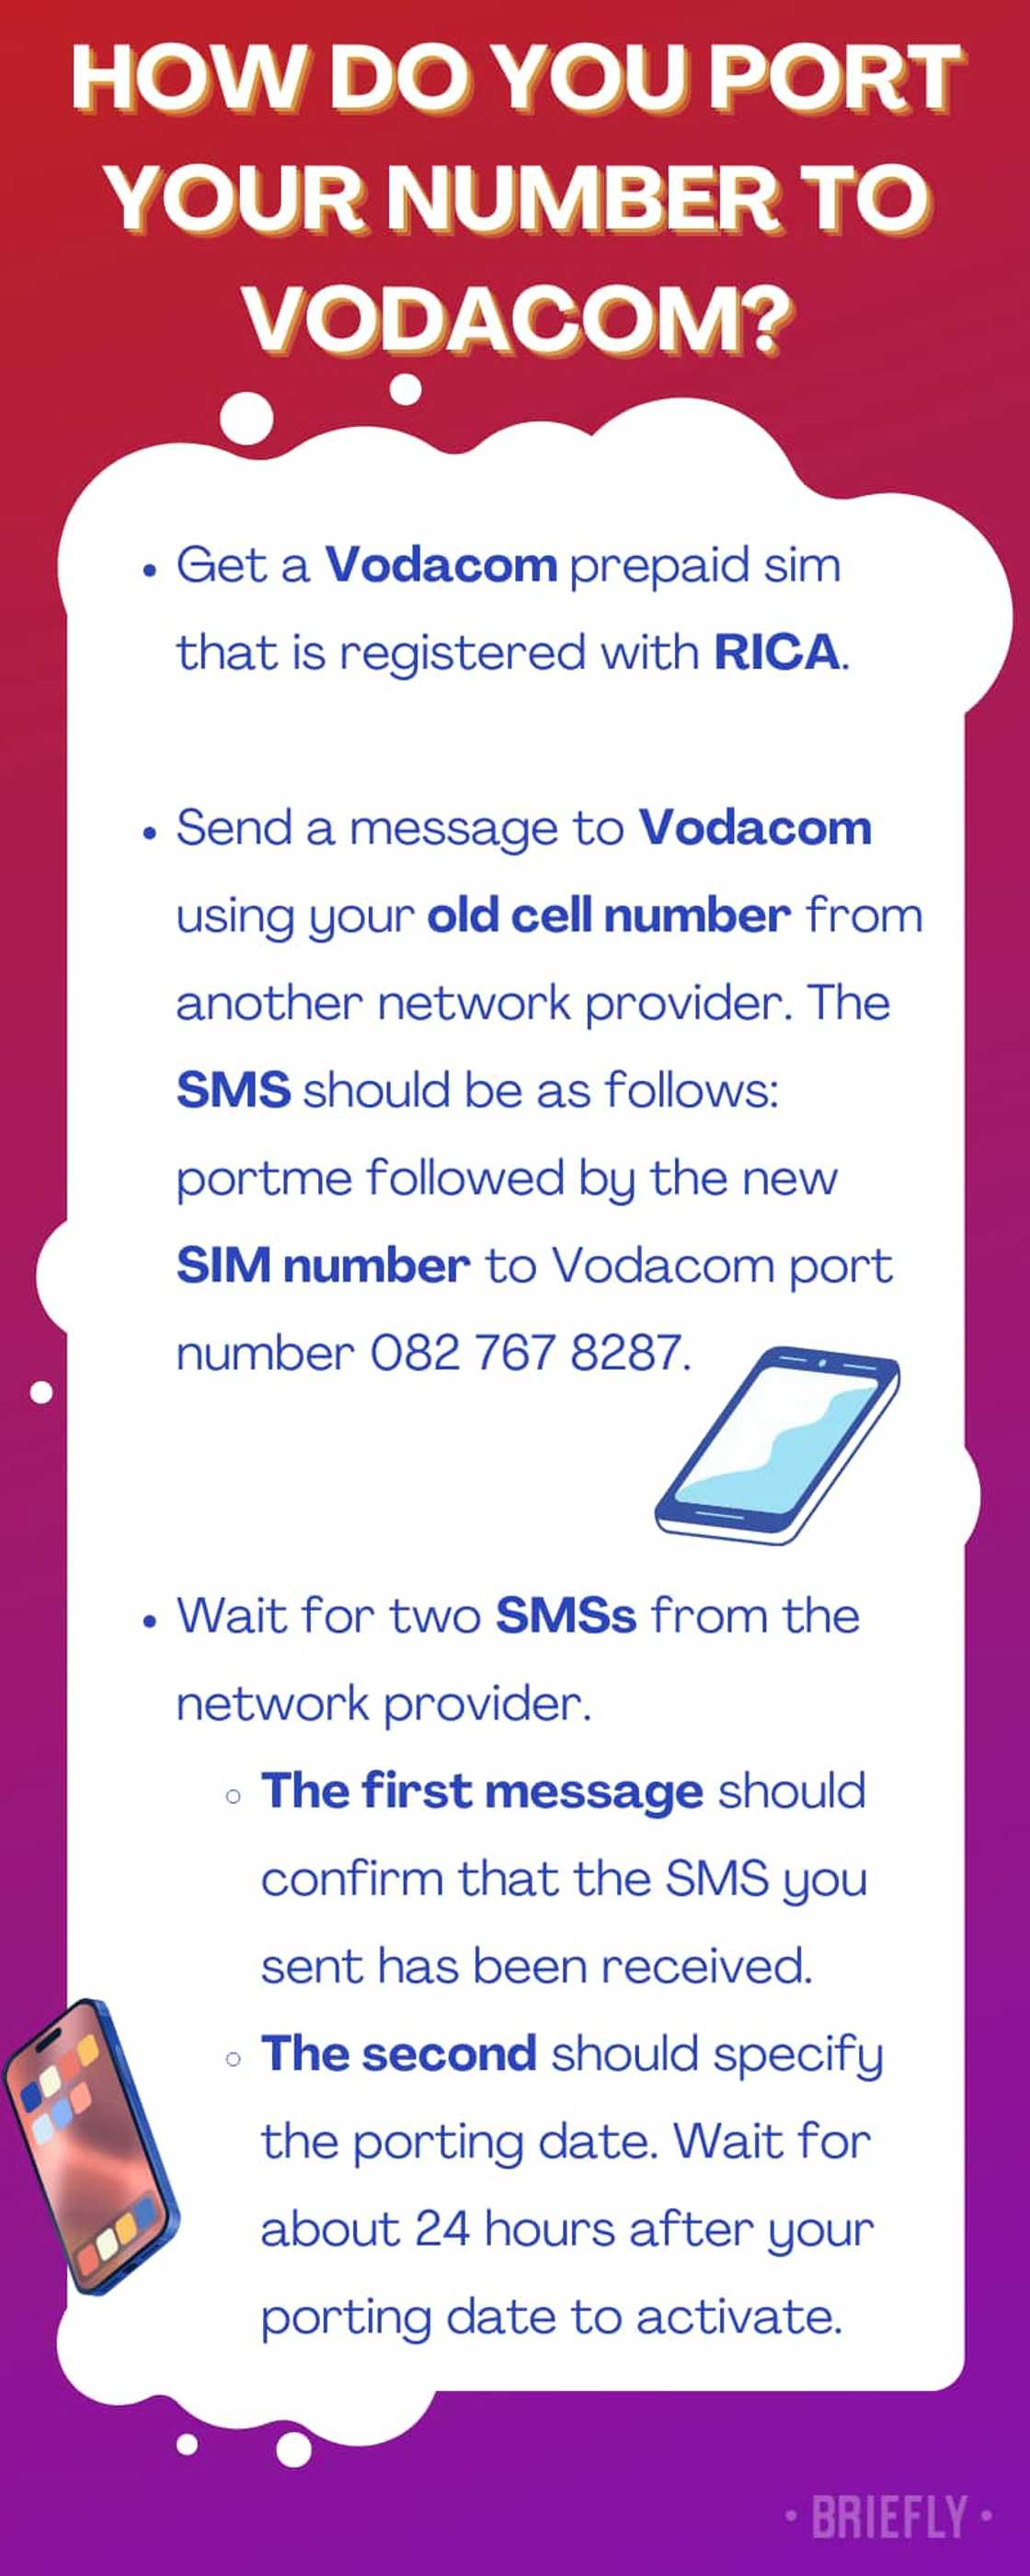 How do you port your number to Vodacom